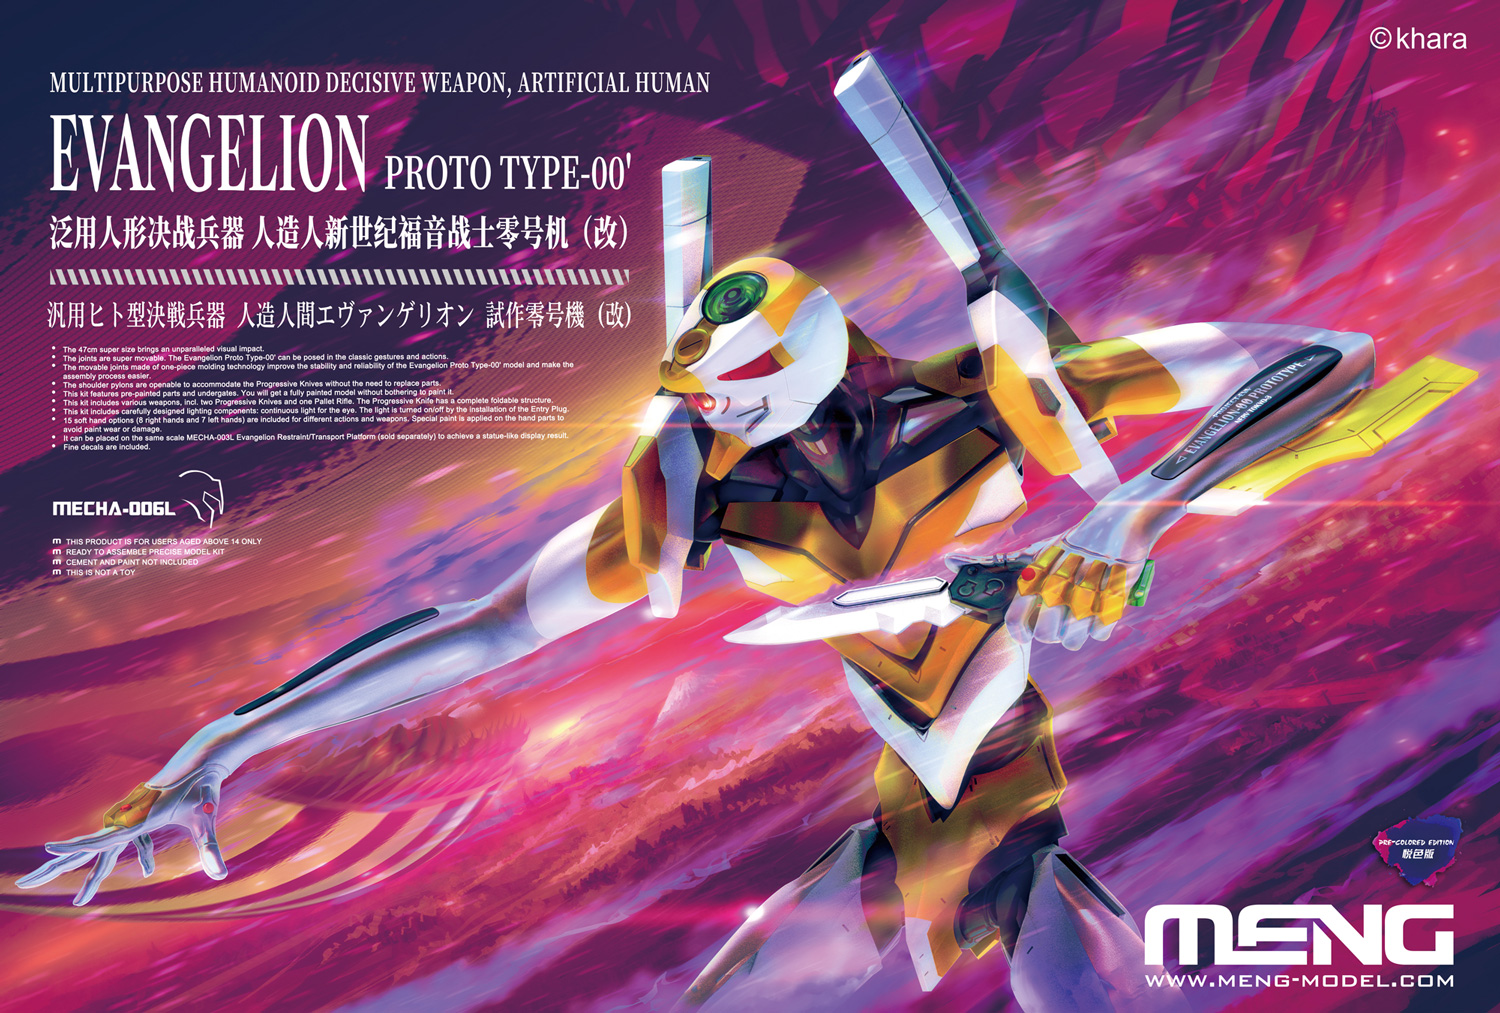 Multipurpose Humanoid Decisive Weapon Evangelion Proto Type-00 (Pre-Coloured Edition)